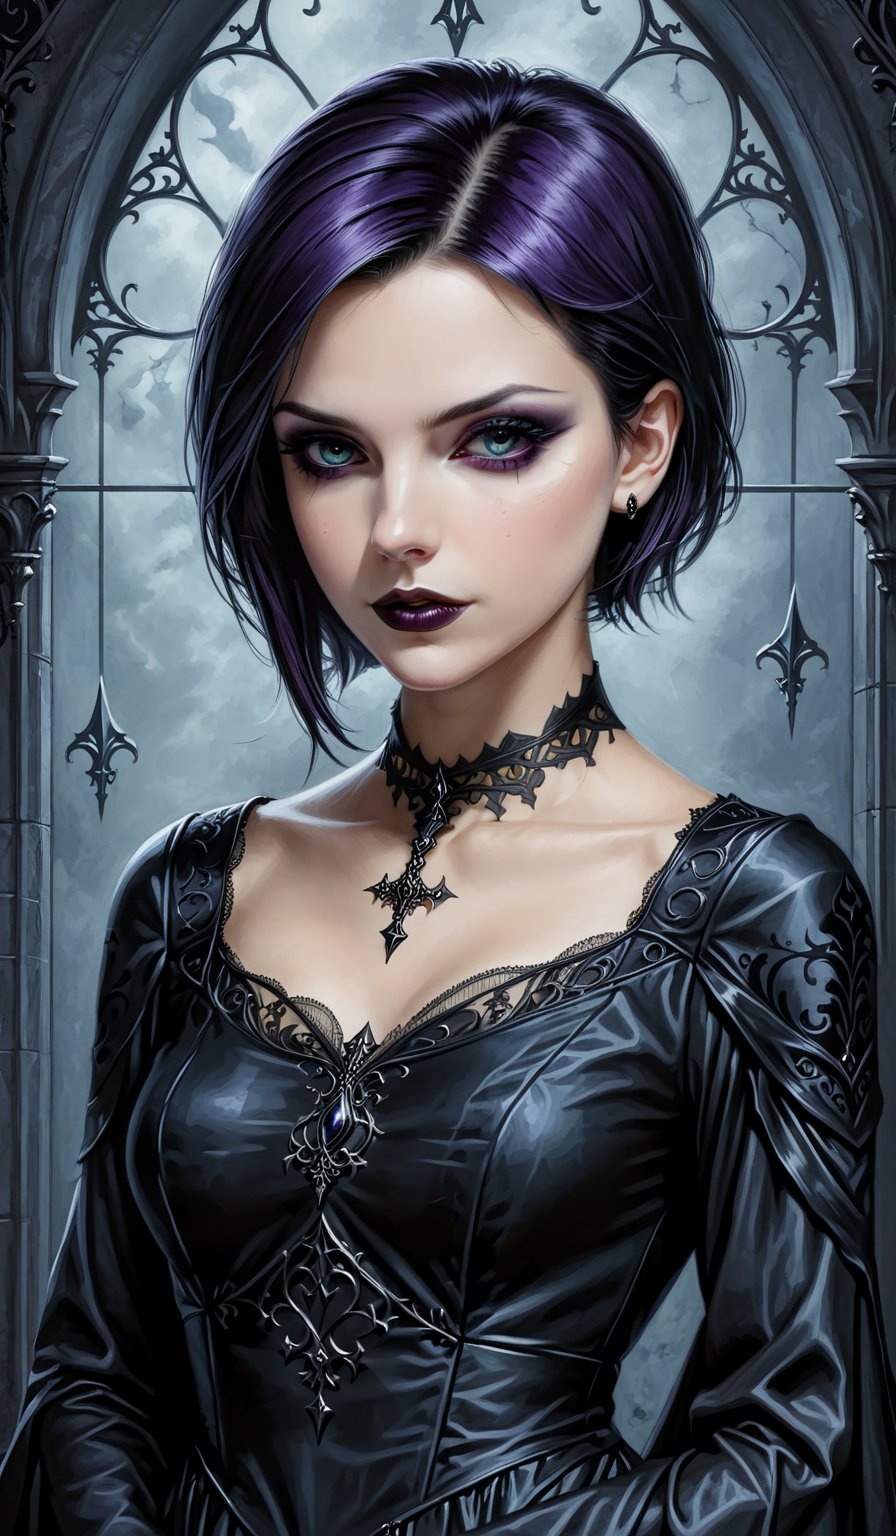 score_9, score_8_up, score_7_up, score_6_up, masterpiece,best quality,illustration,style of Jessica Galbreth portrait of dark gothic girl,Gothic,Short hair,